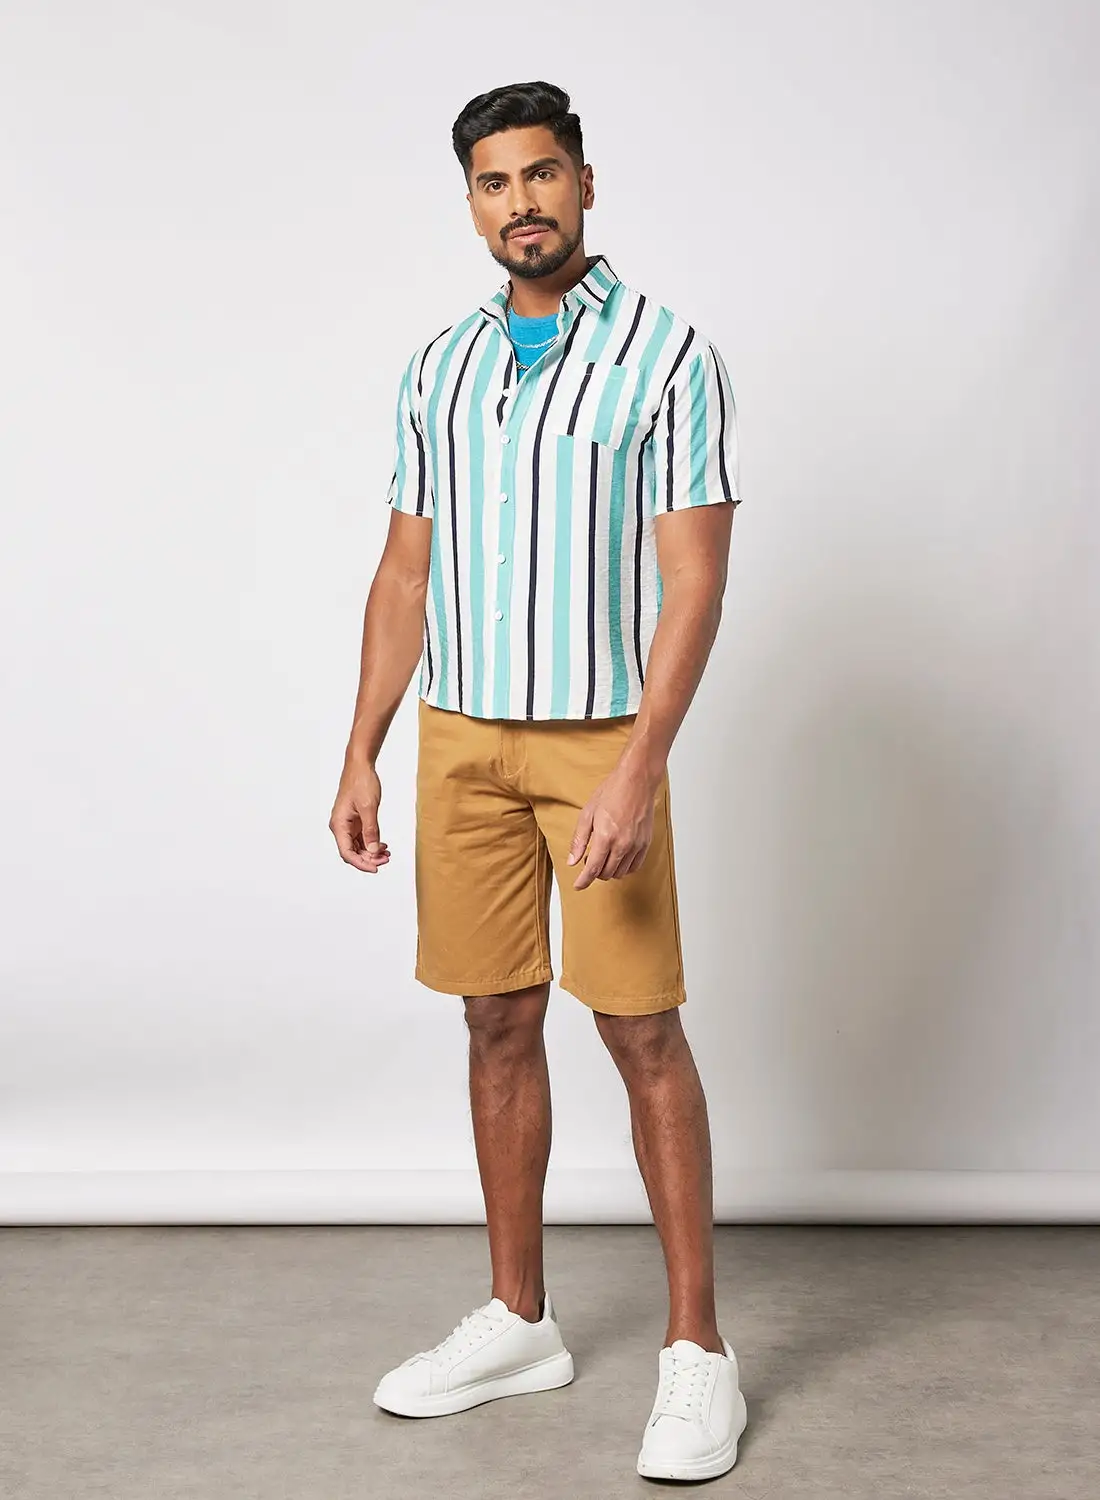 QUWA Casual Stripes Short Sleeves Woven Shirt with Pocket Aqua Stripe